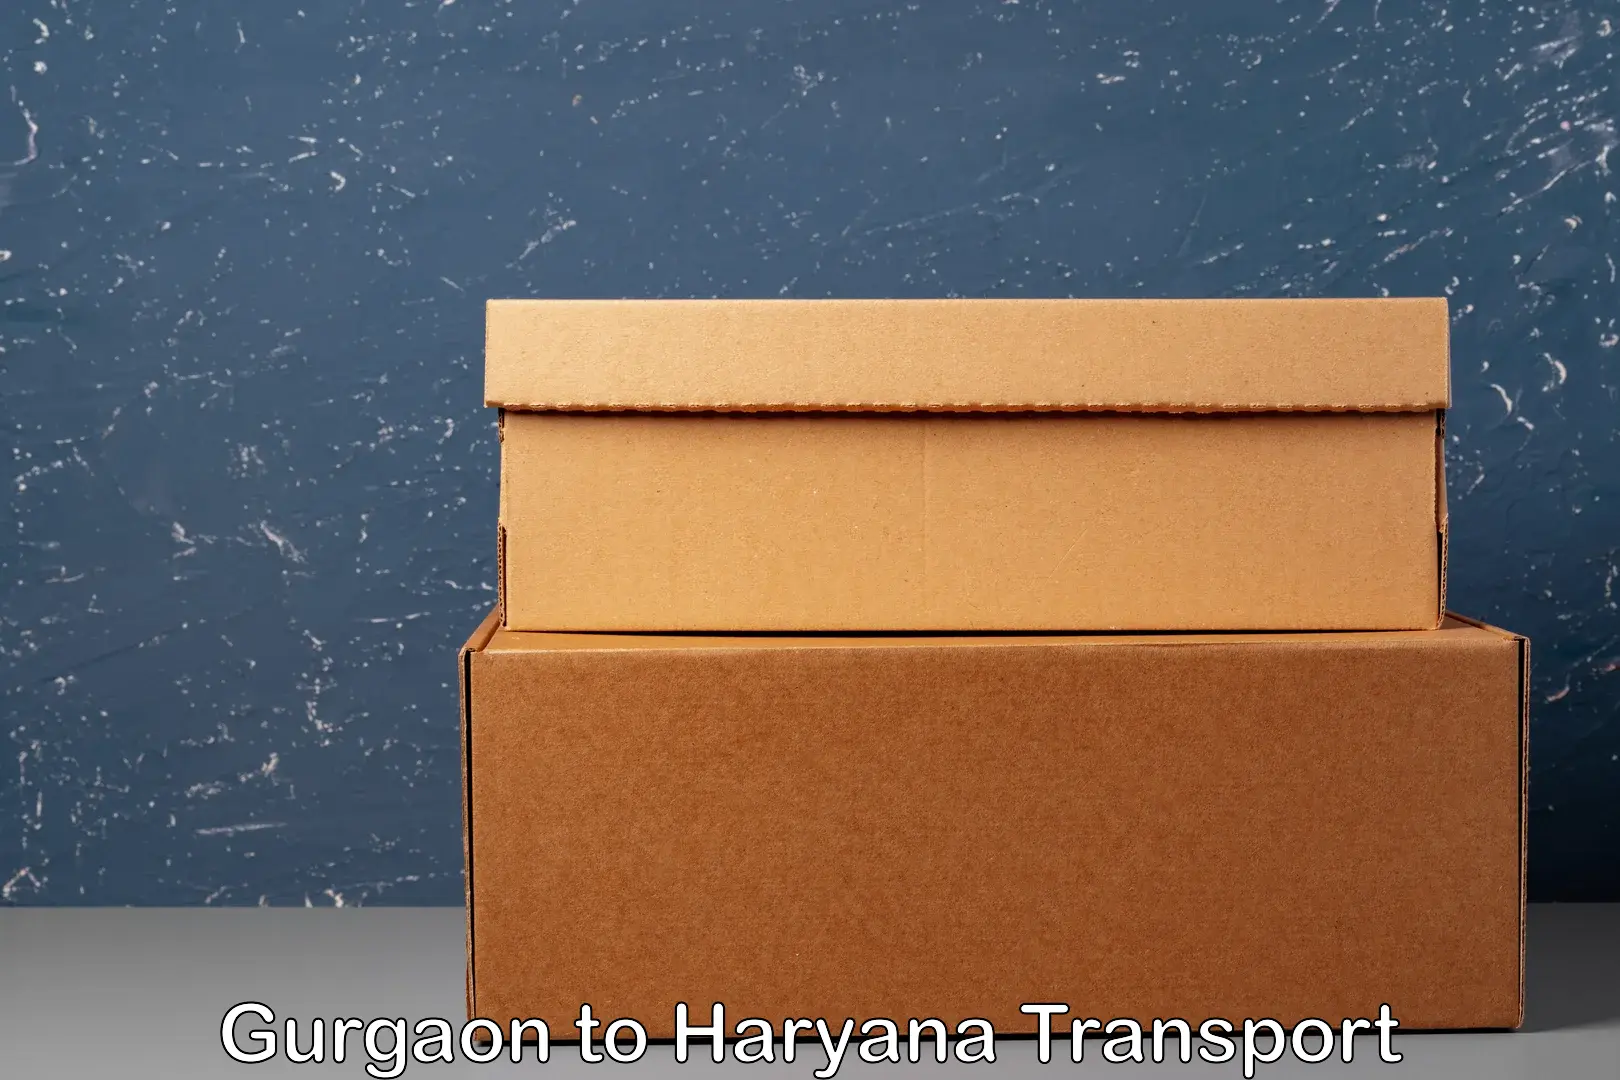 Shipping partner Gurgaon to Haryana